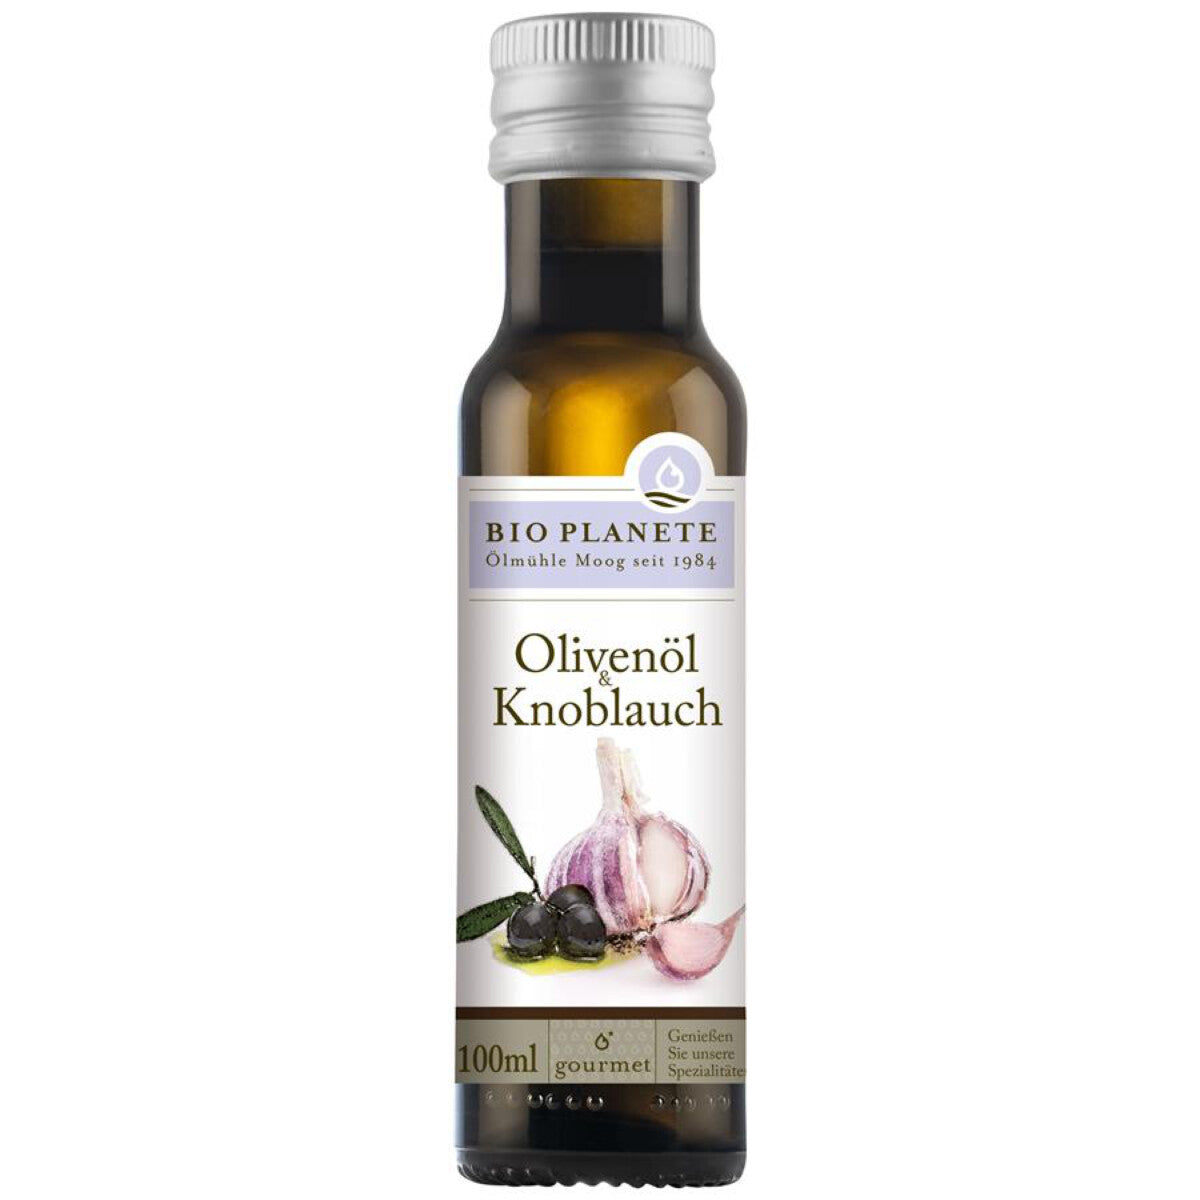 BIO PLANETE Olivenöl & Knoblauch - 0,1 l